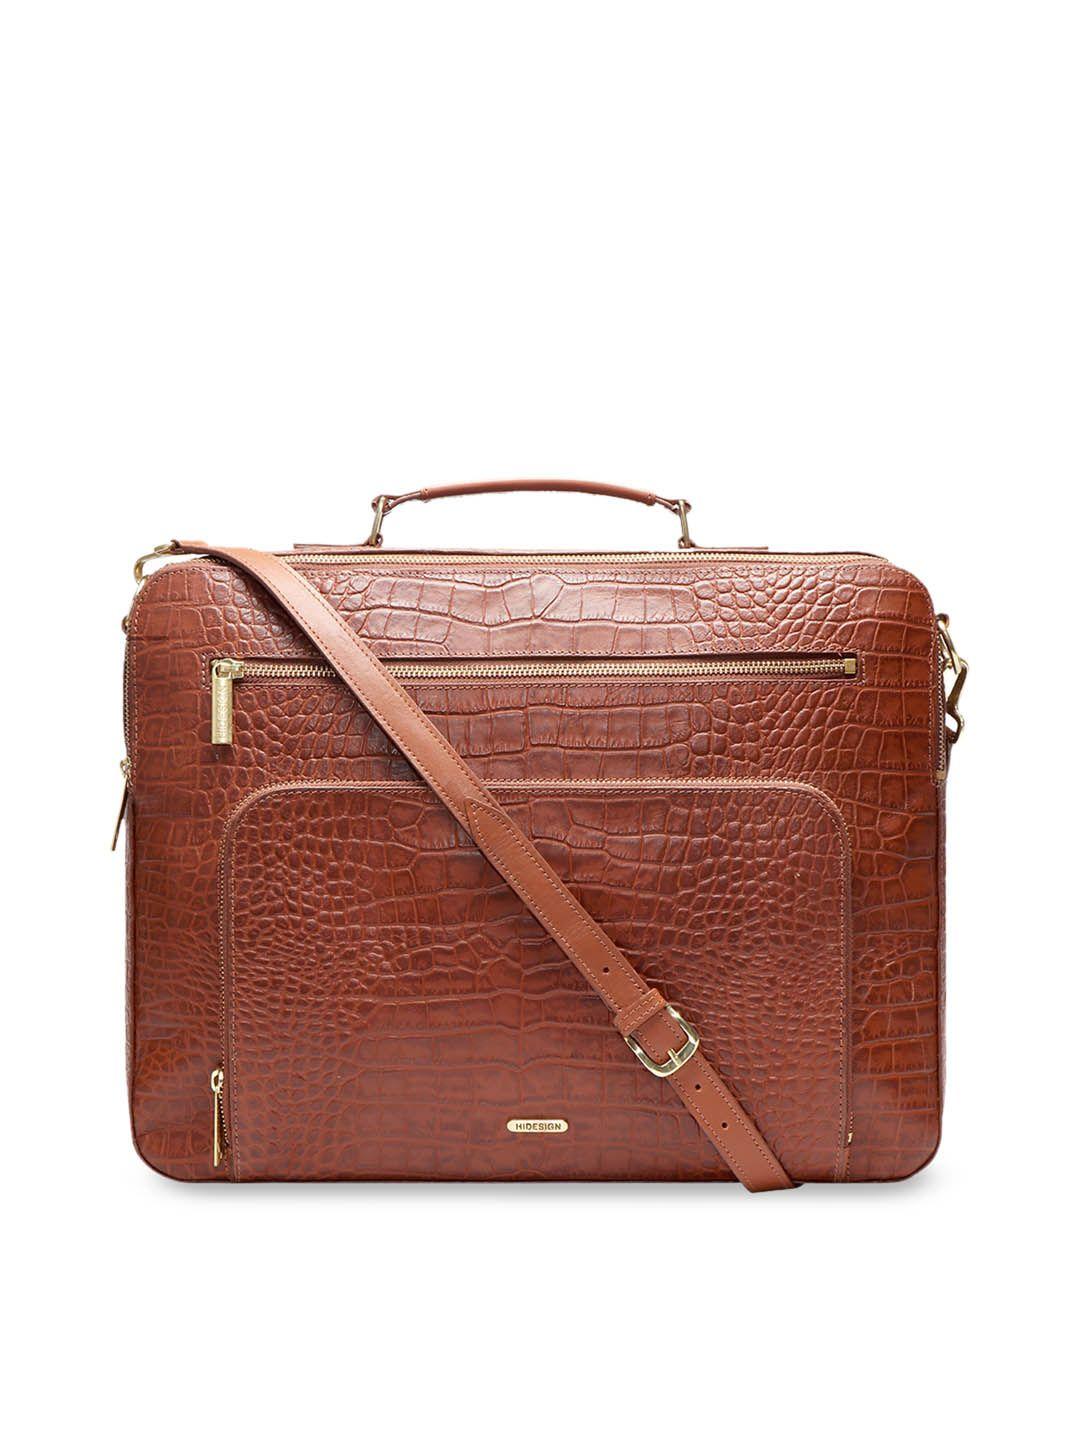 hidesign men tan brown leather textured laptop bag